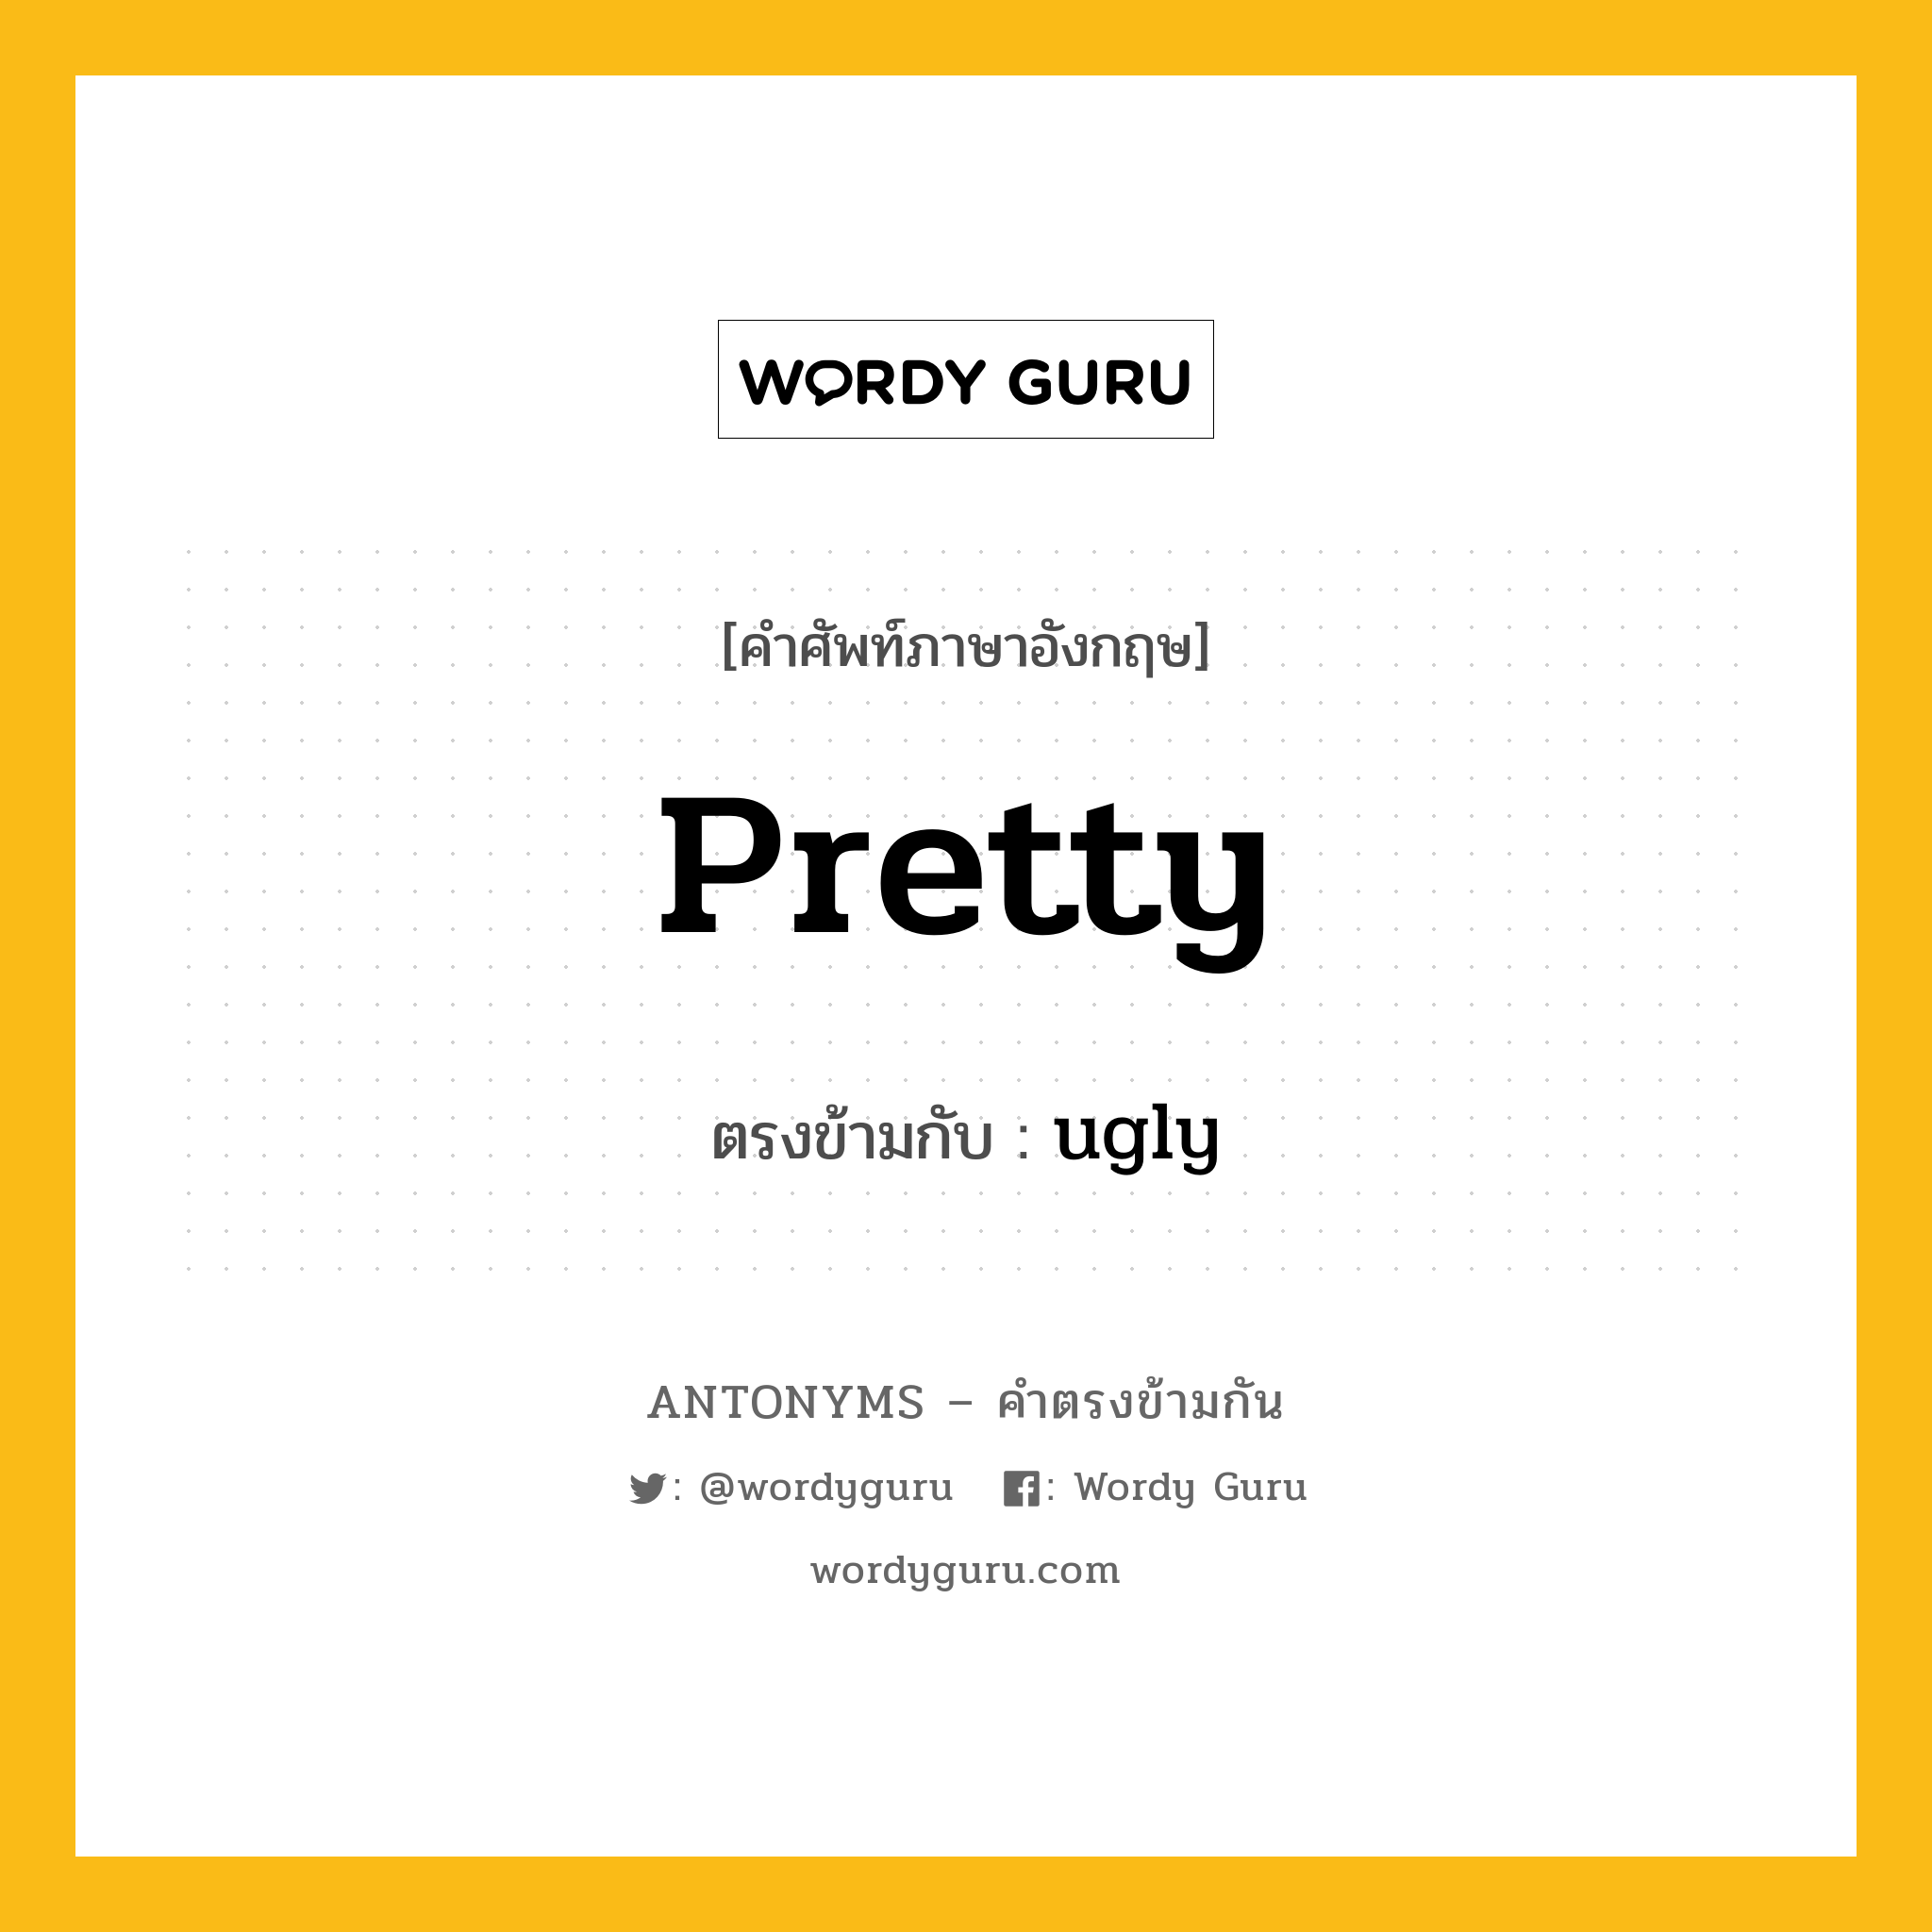 pretty เป็นคำตรงข้ามกับคำไหนบ้าง?, คำศัพท์ภาษาอังกฤษ pretty ตรงข้ามกับ ugly หมวด ugly